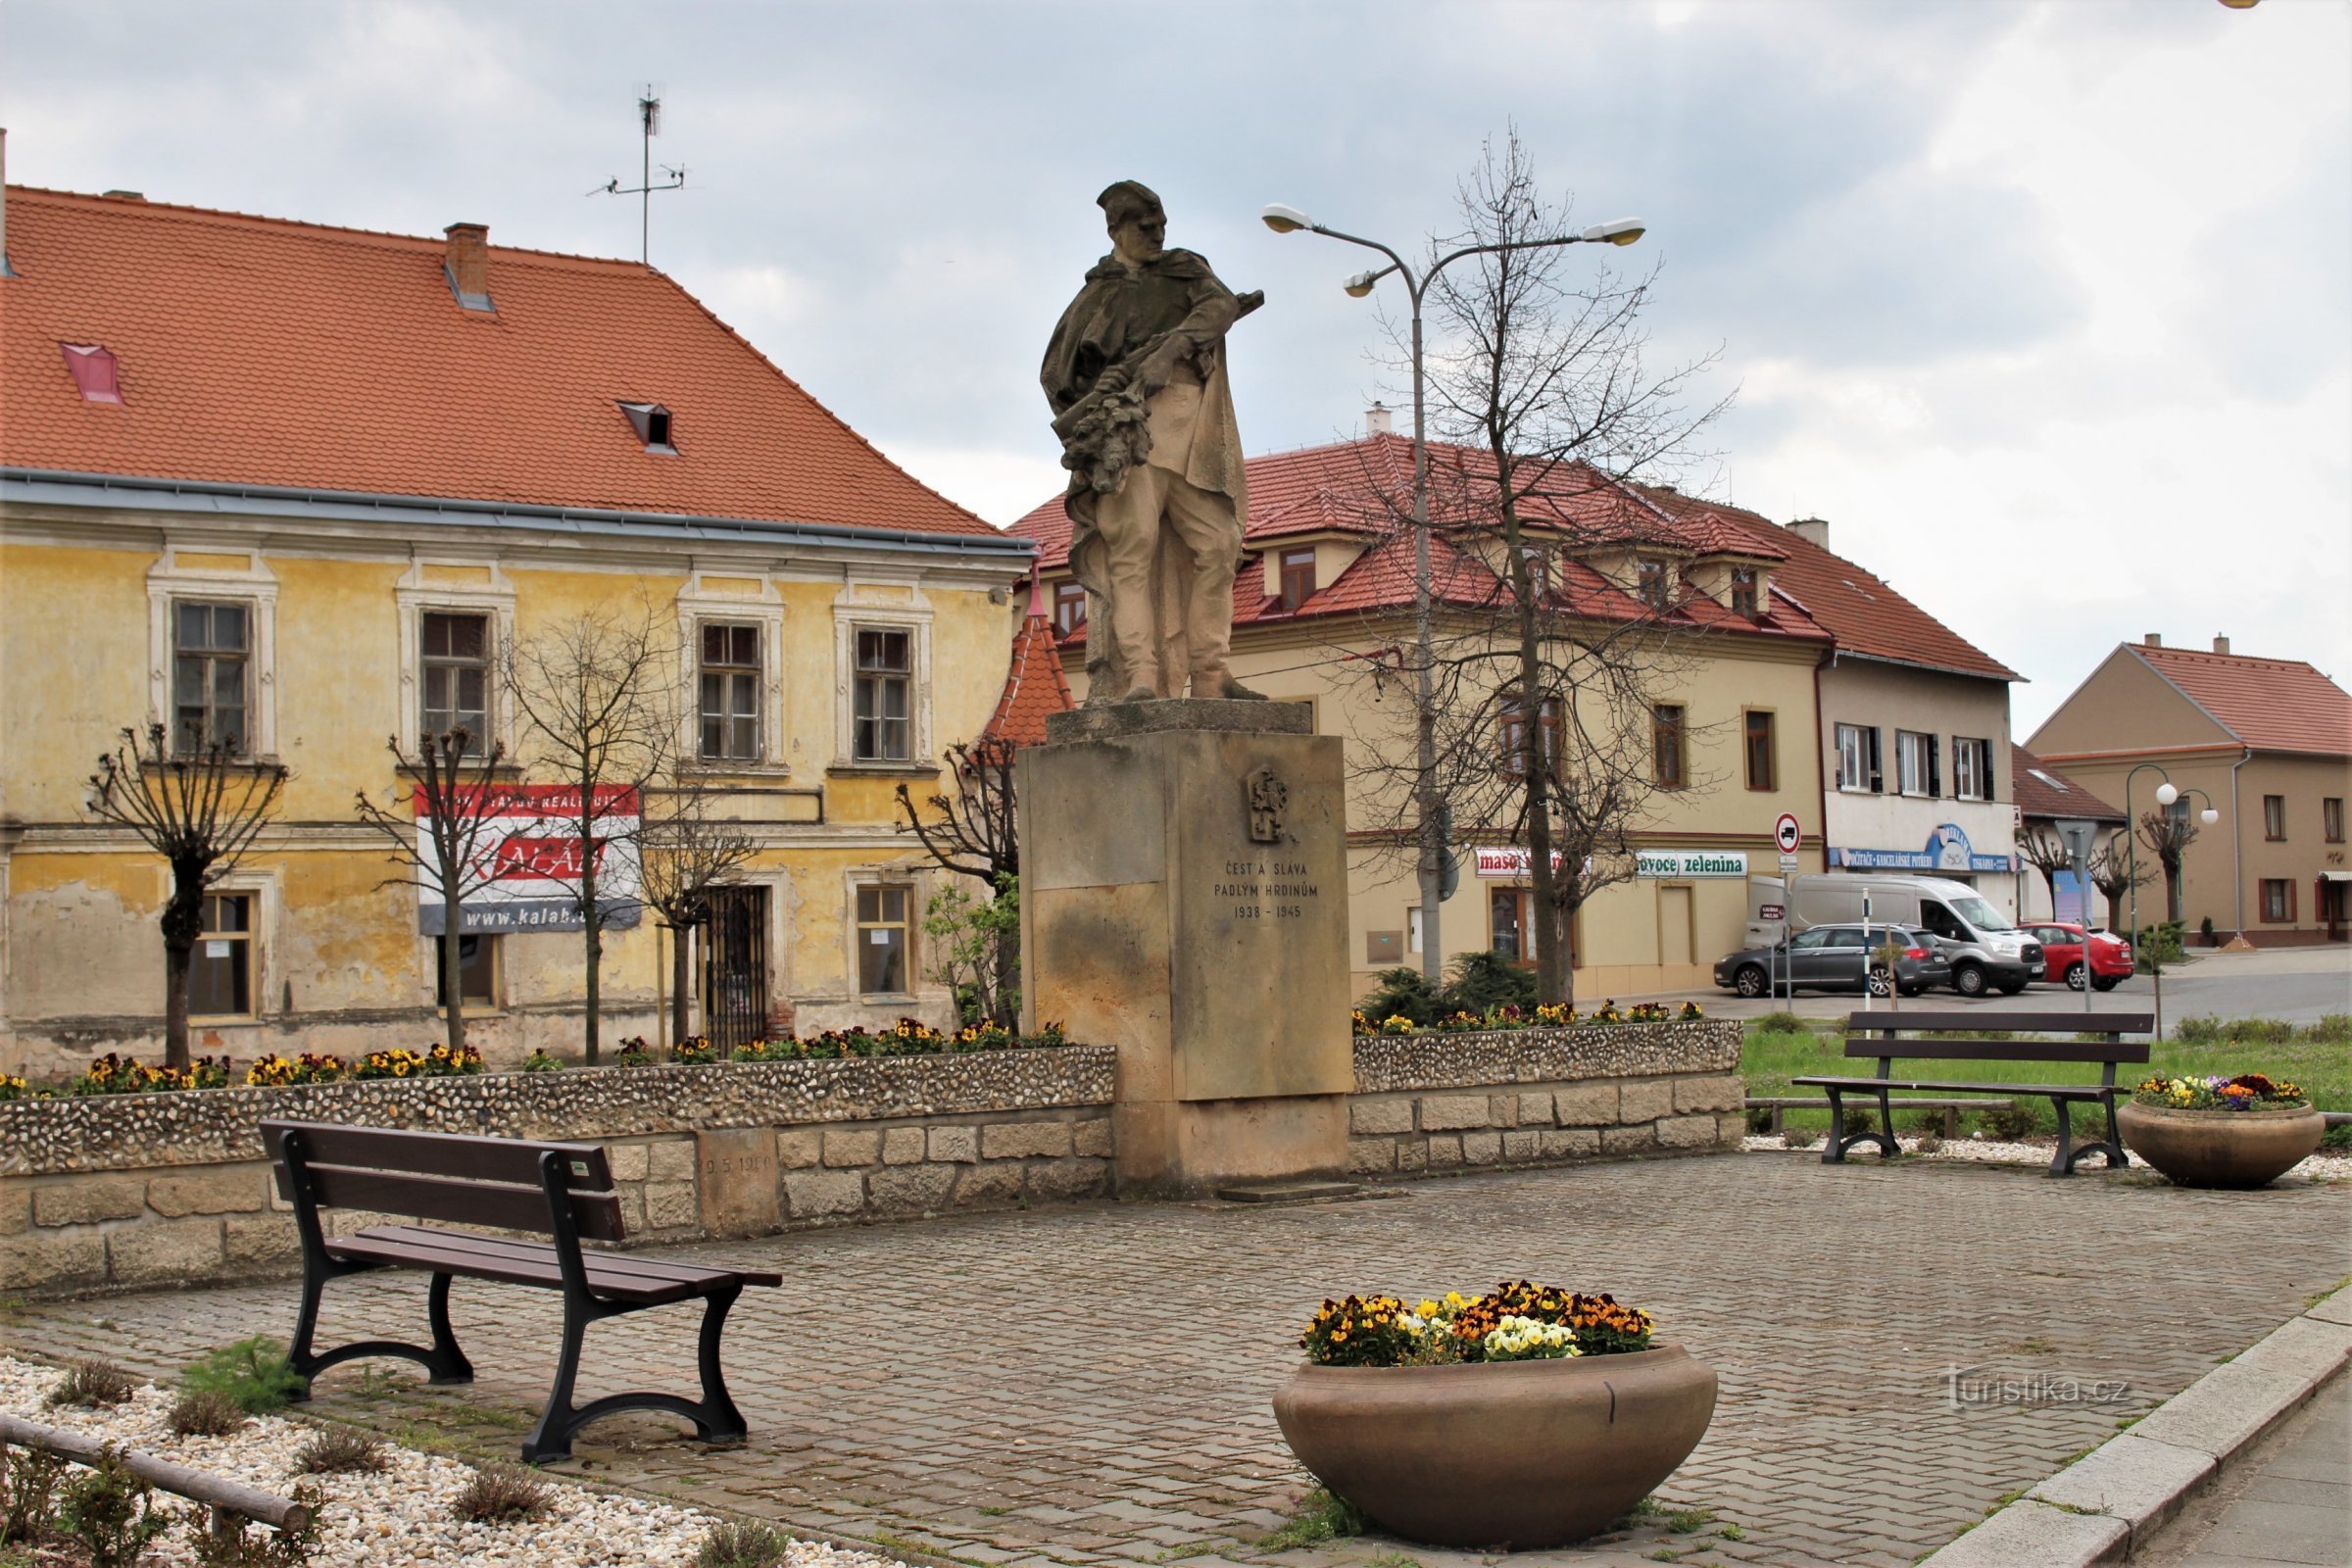 Rudoarmějc の支配的な像がある自由広場